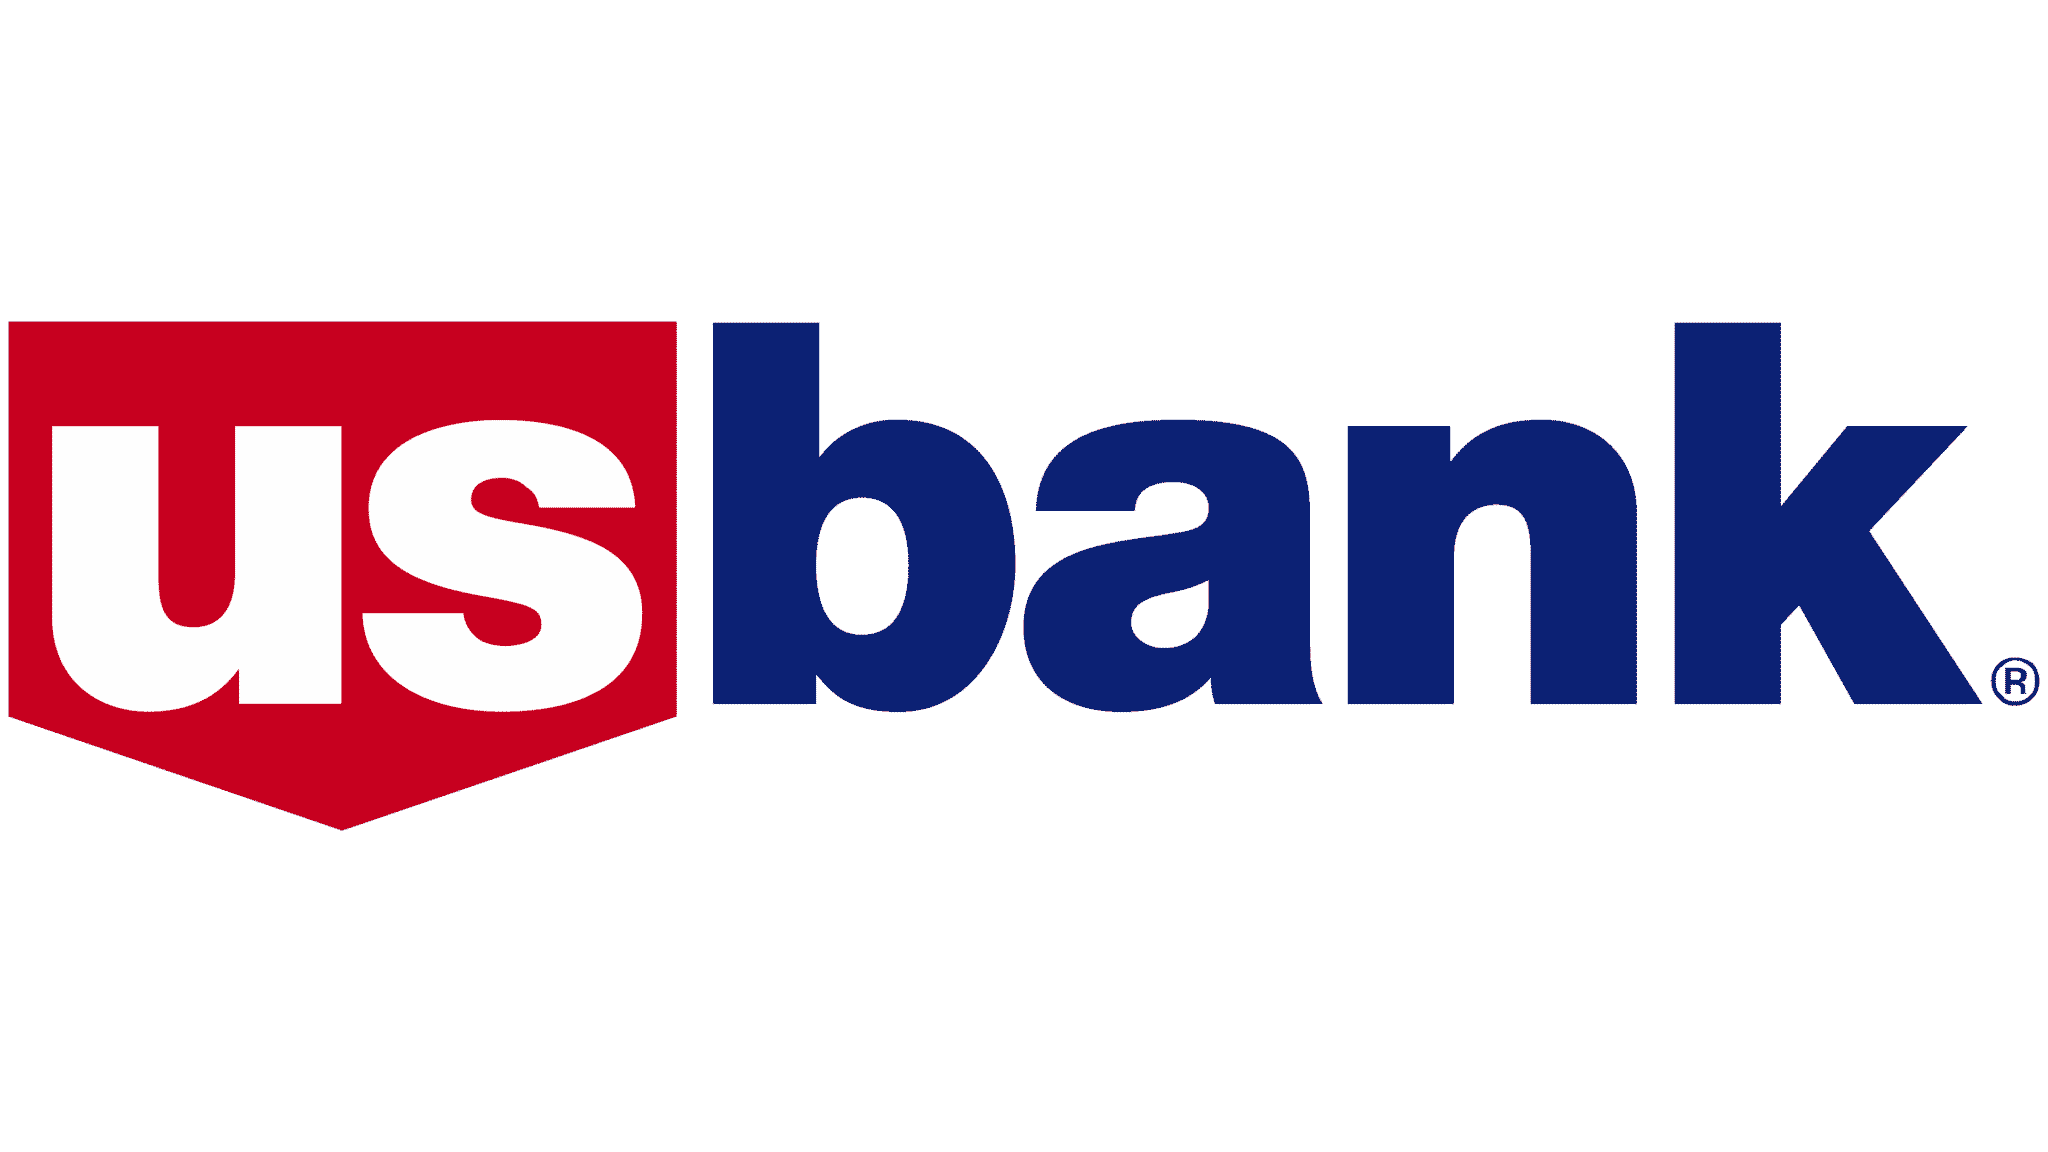 Business savings accounts: US Bank